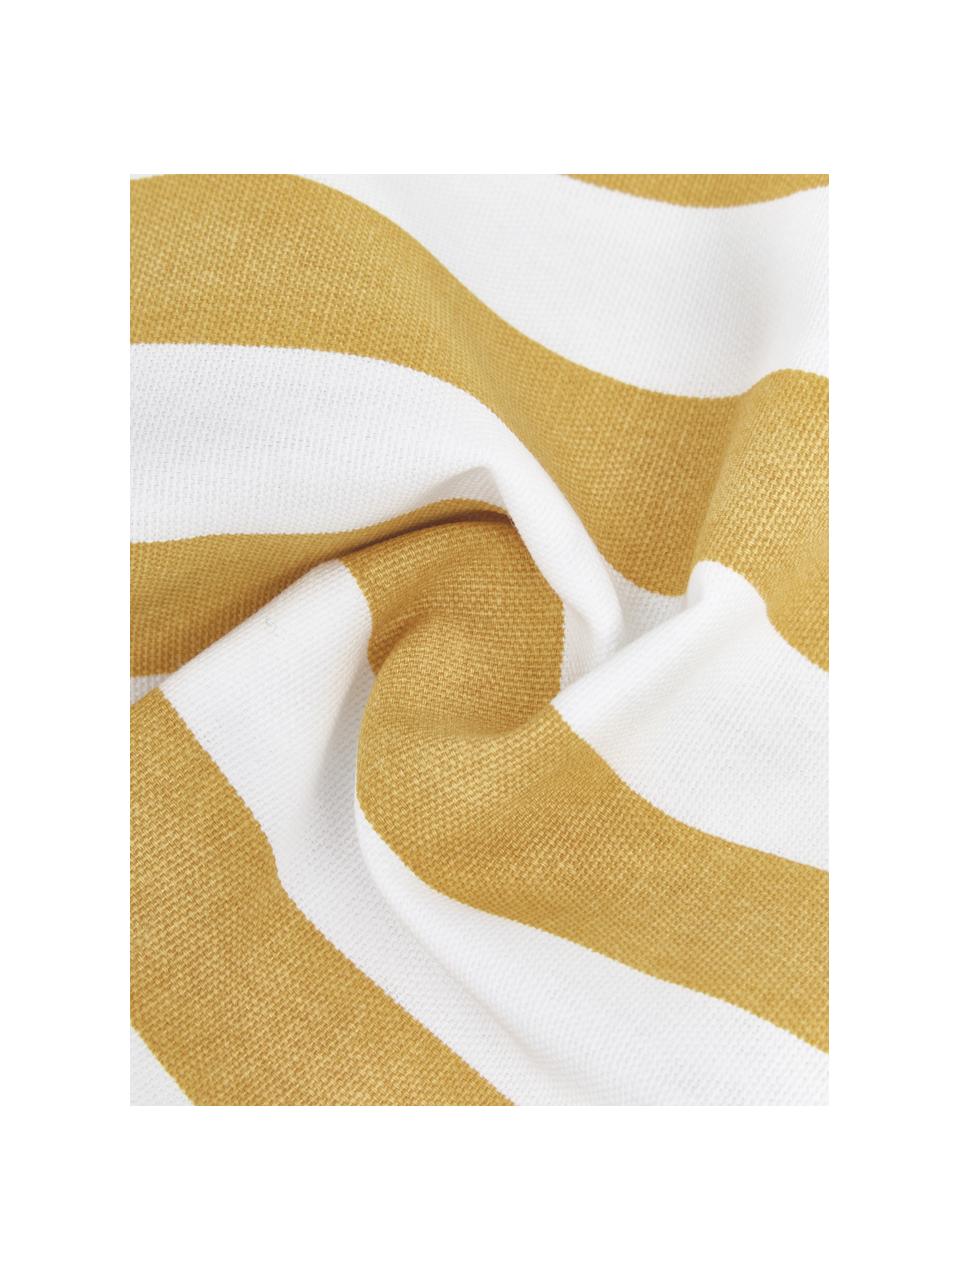 Federa arredo a righe color giallo/bianco Timon, 100% cotone, Giallo, bianco, Larg. 30 x Lung. 50 cm